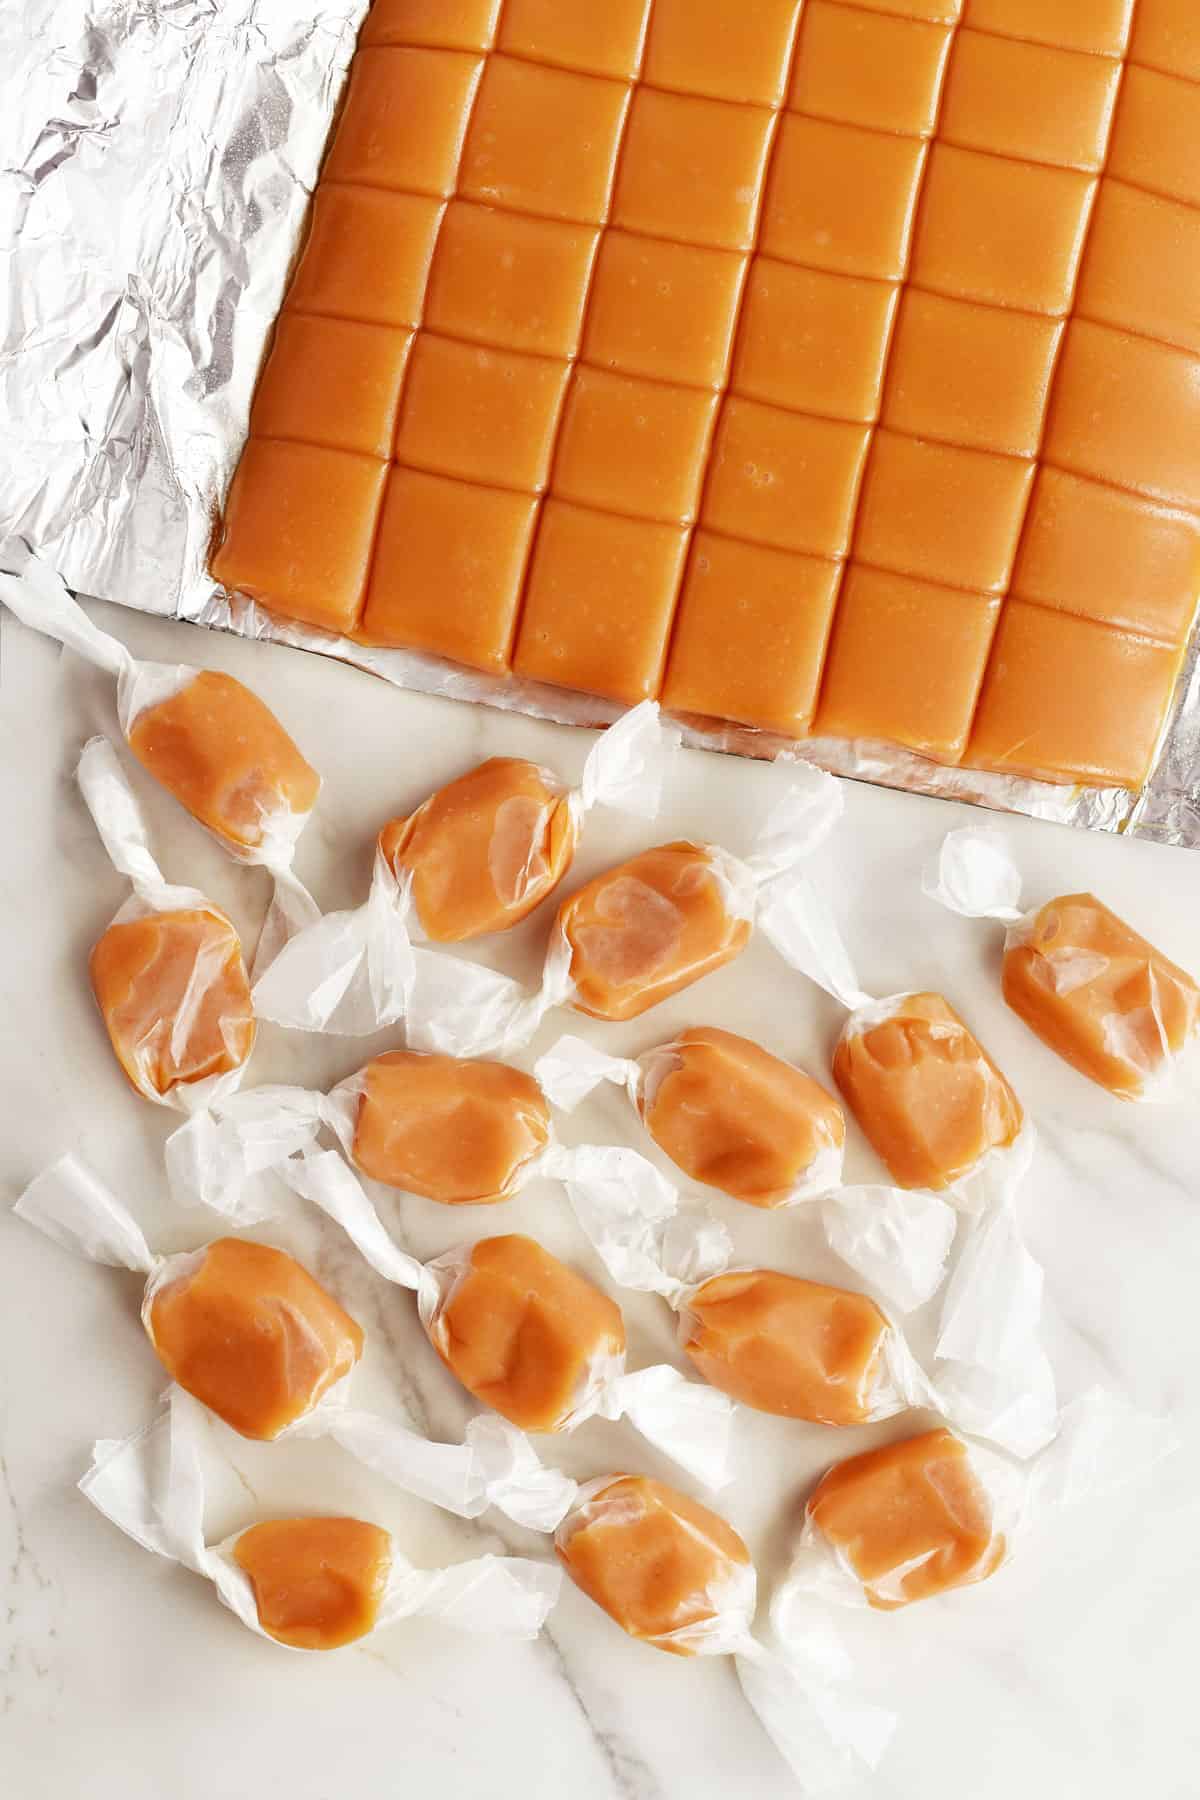 https://www.thegunnysack.com/wp-content/uploads/2019/12/Homemade-Caramel-Candy.jpg